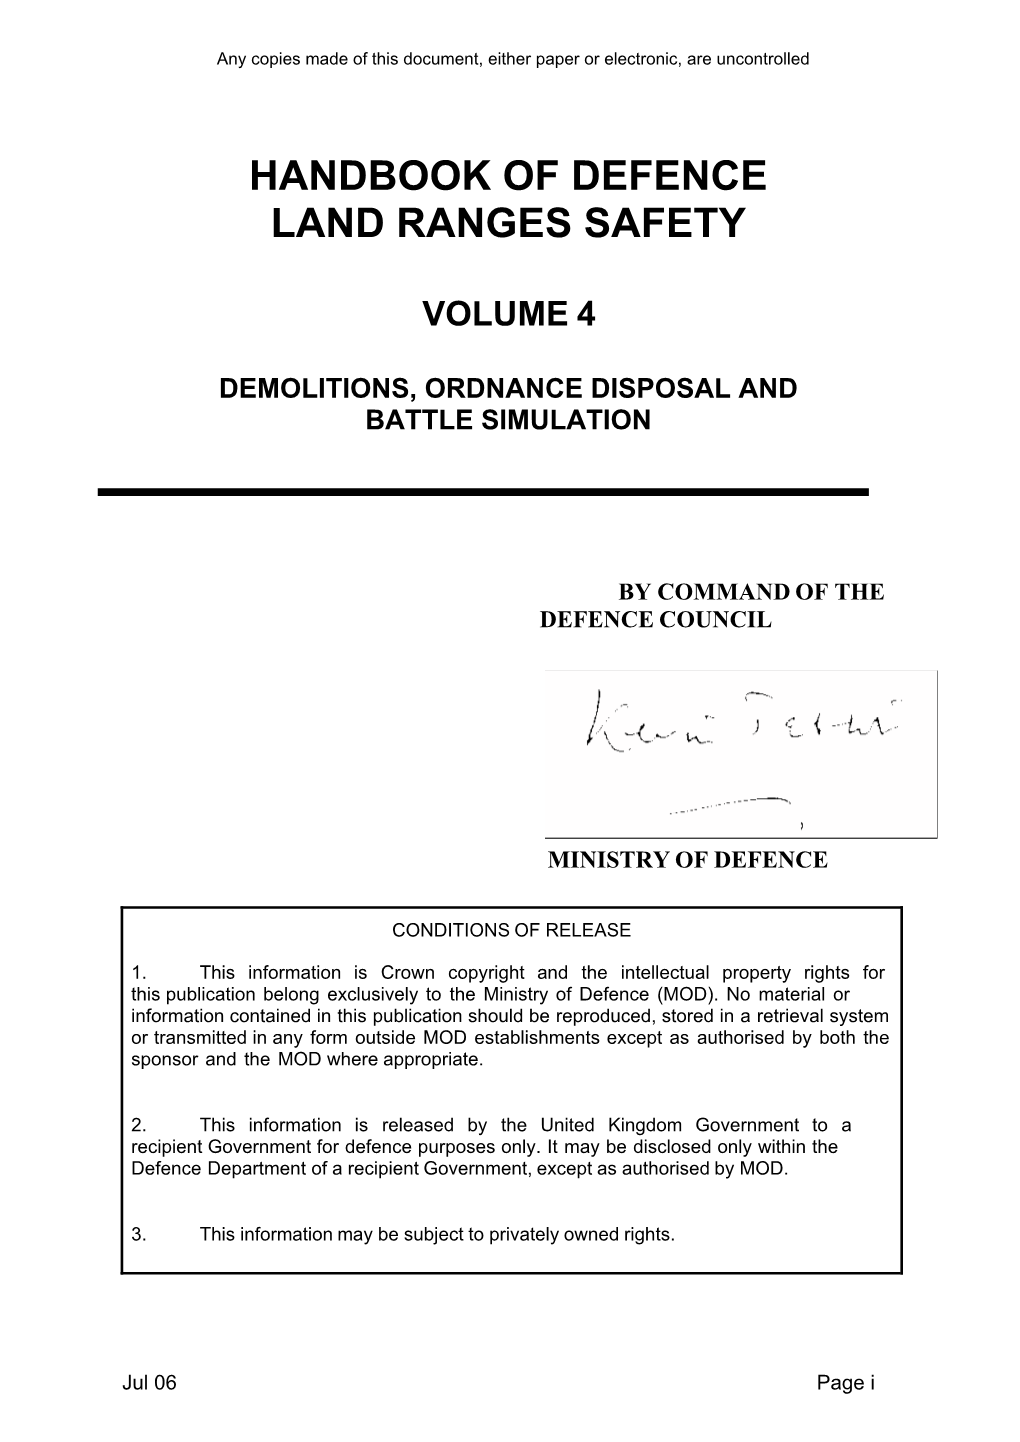 Handbook of Defence Land Ranges Safety Volume 4